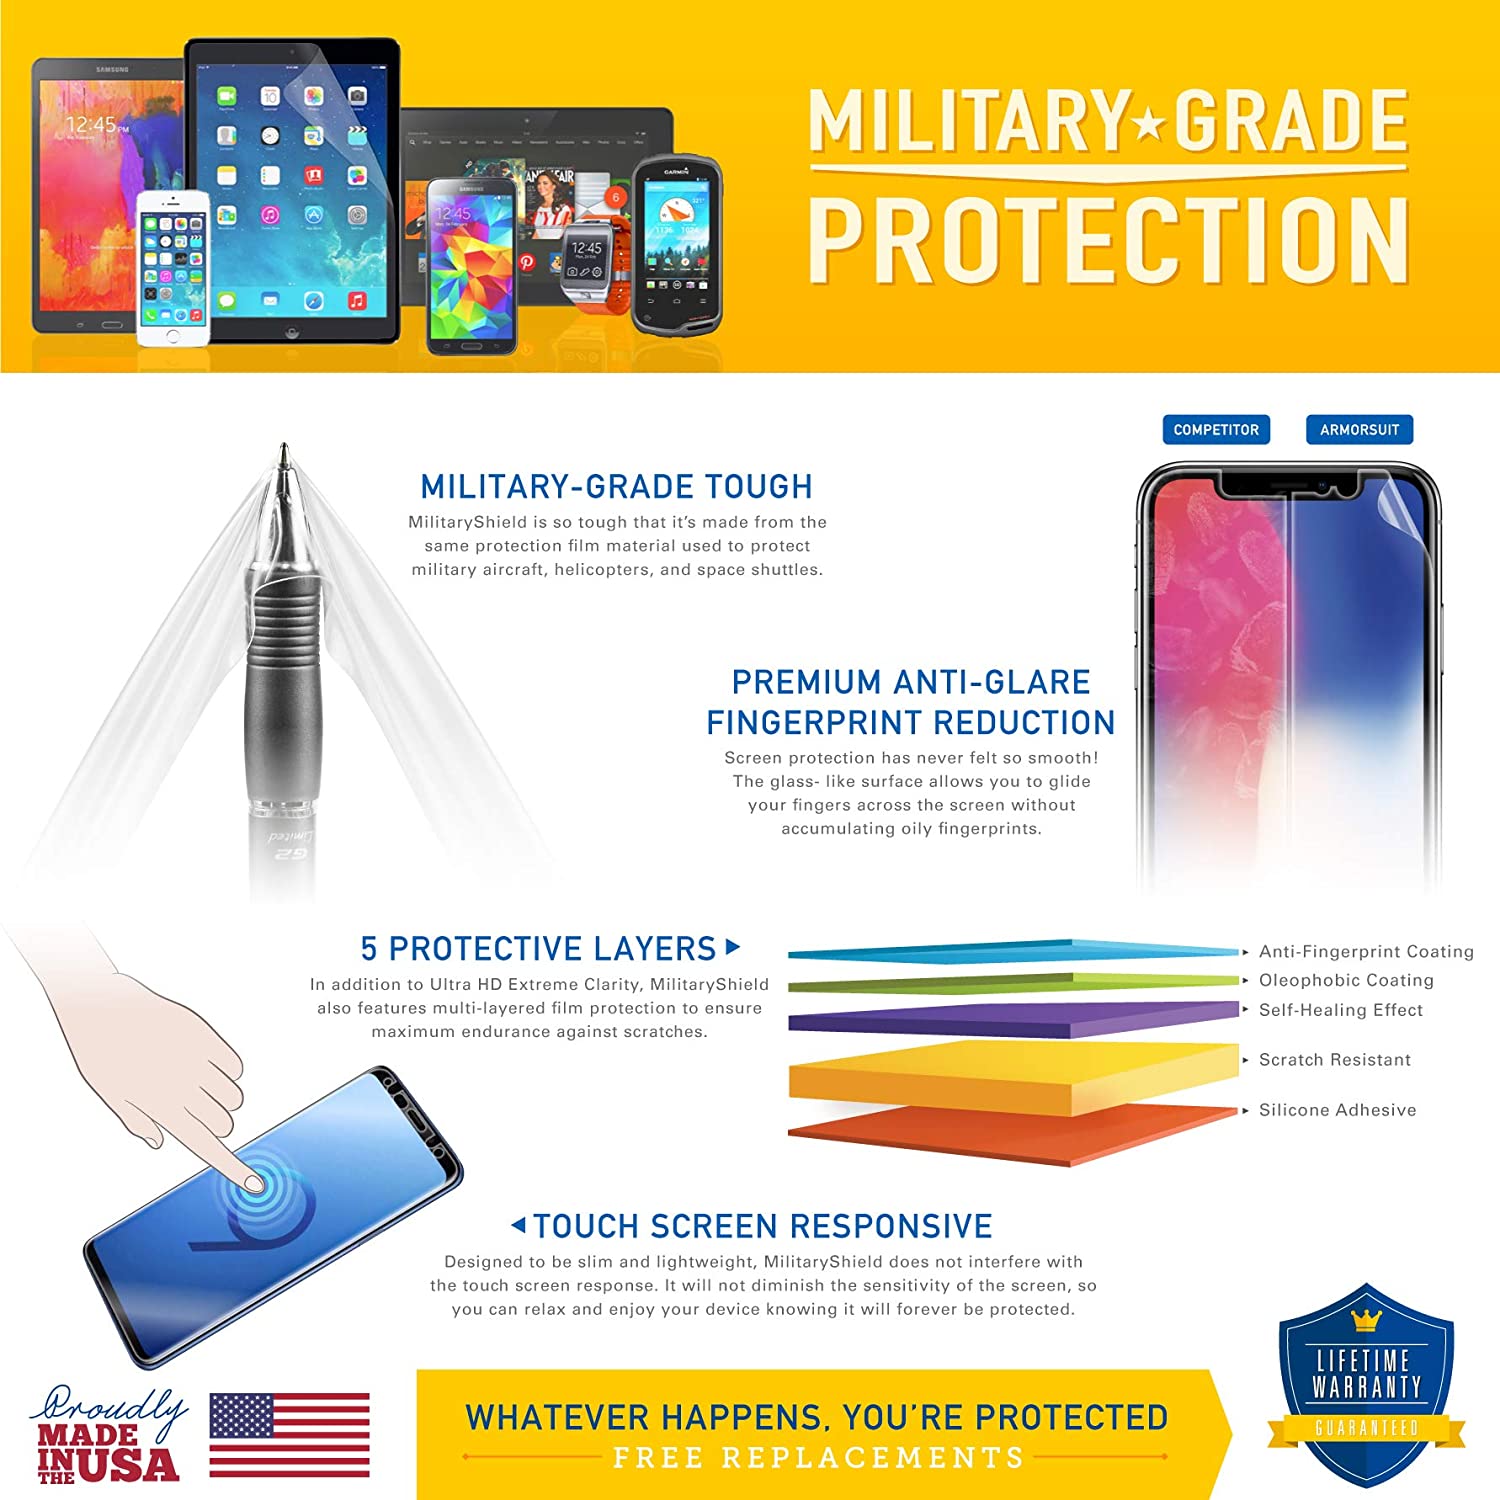 Samsung Gear Fit Full Body Skin Protector